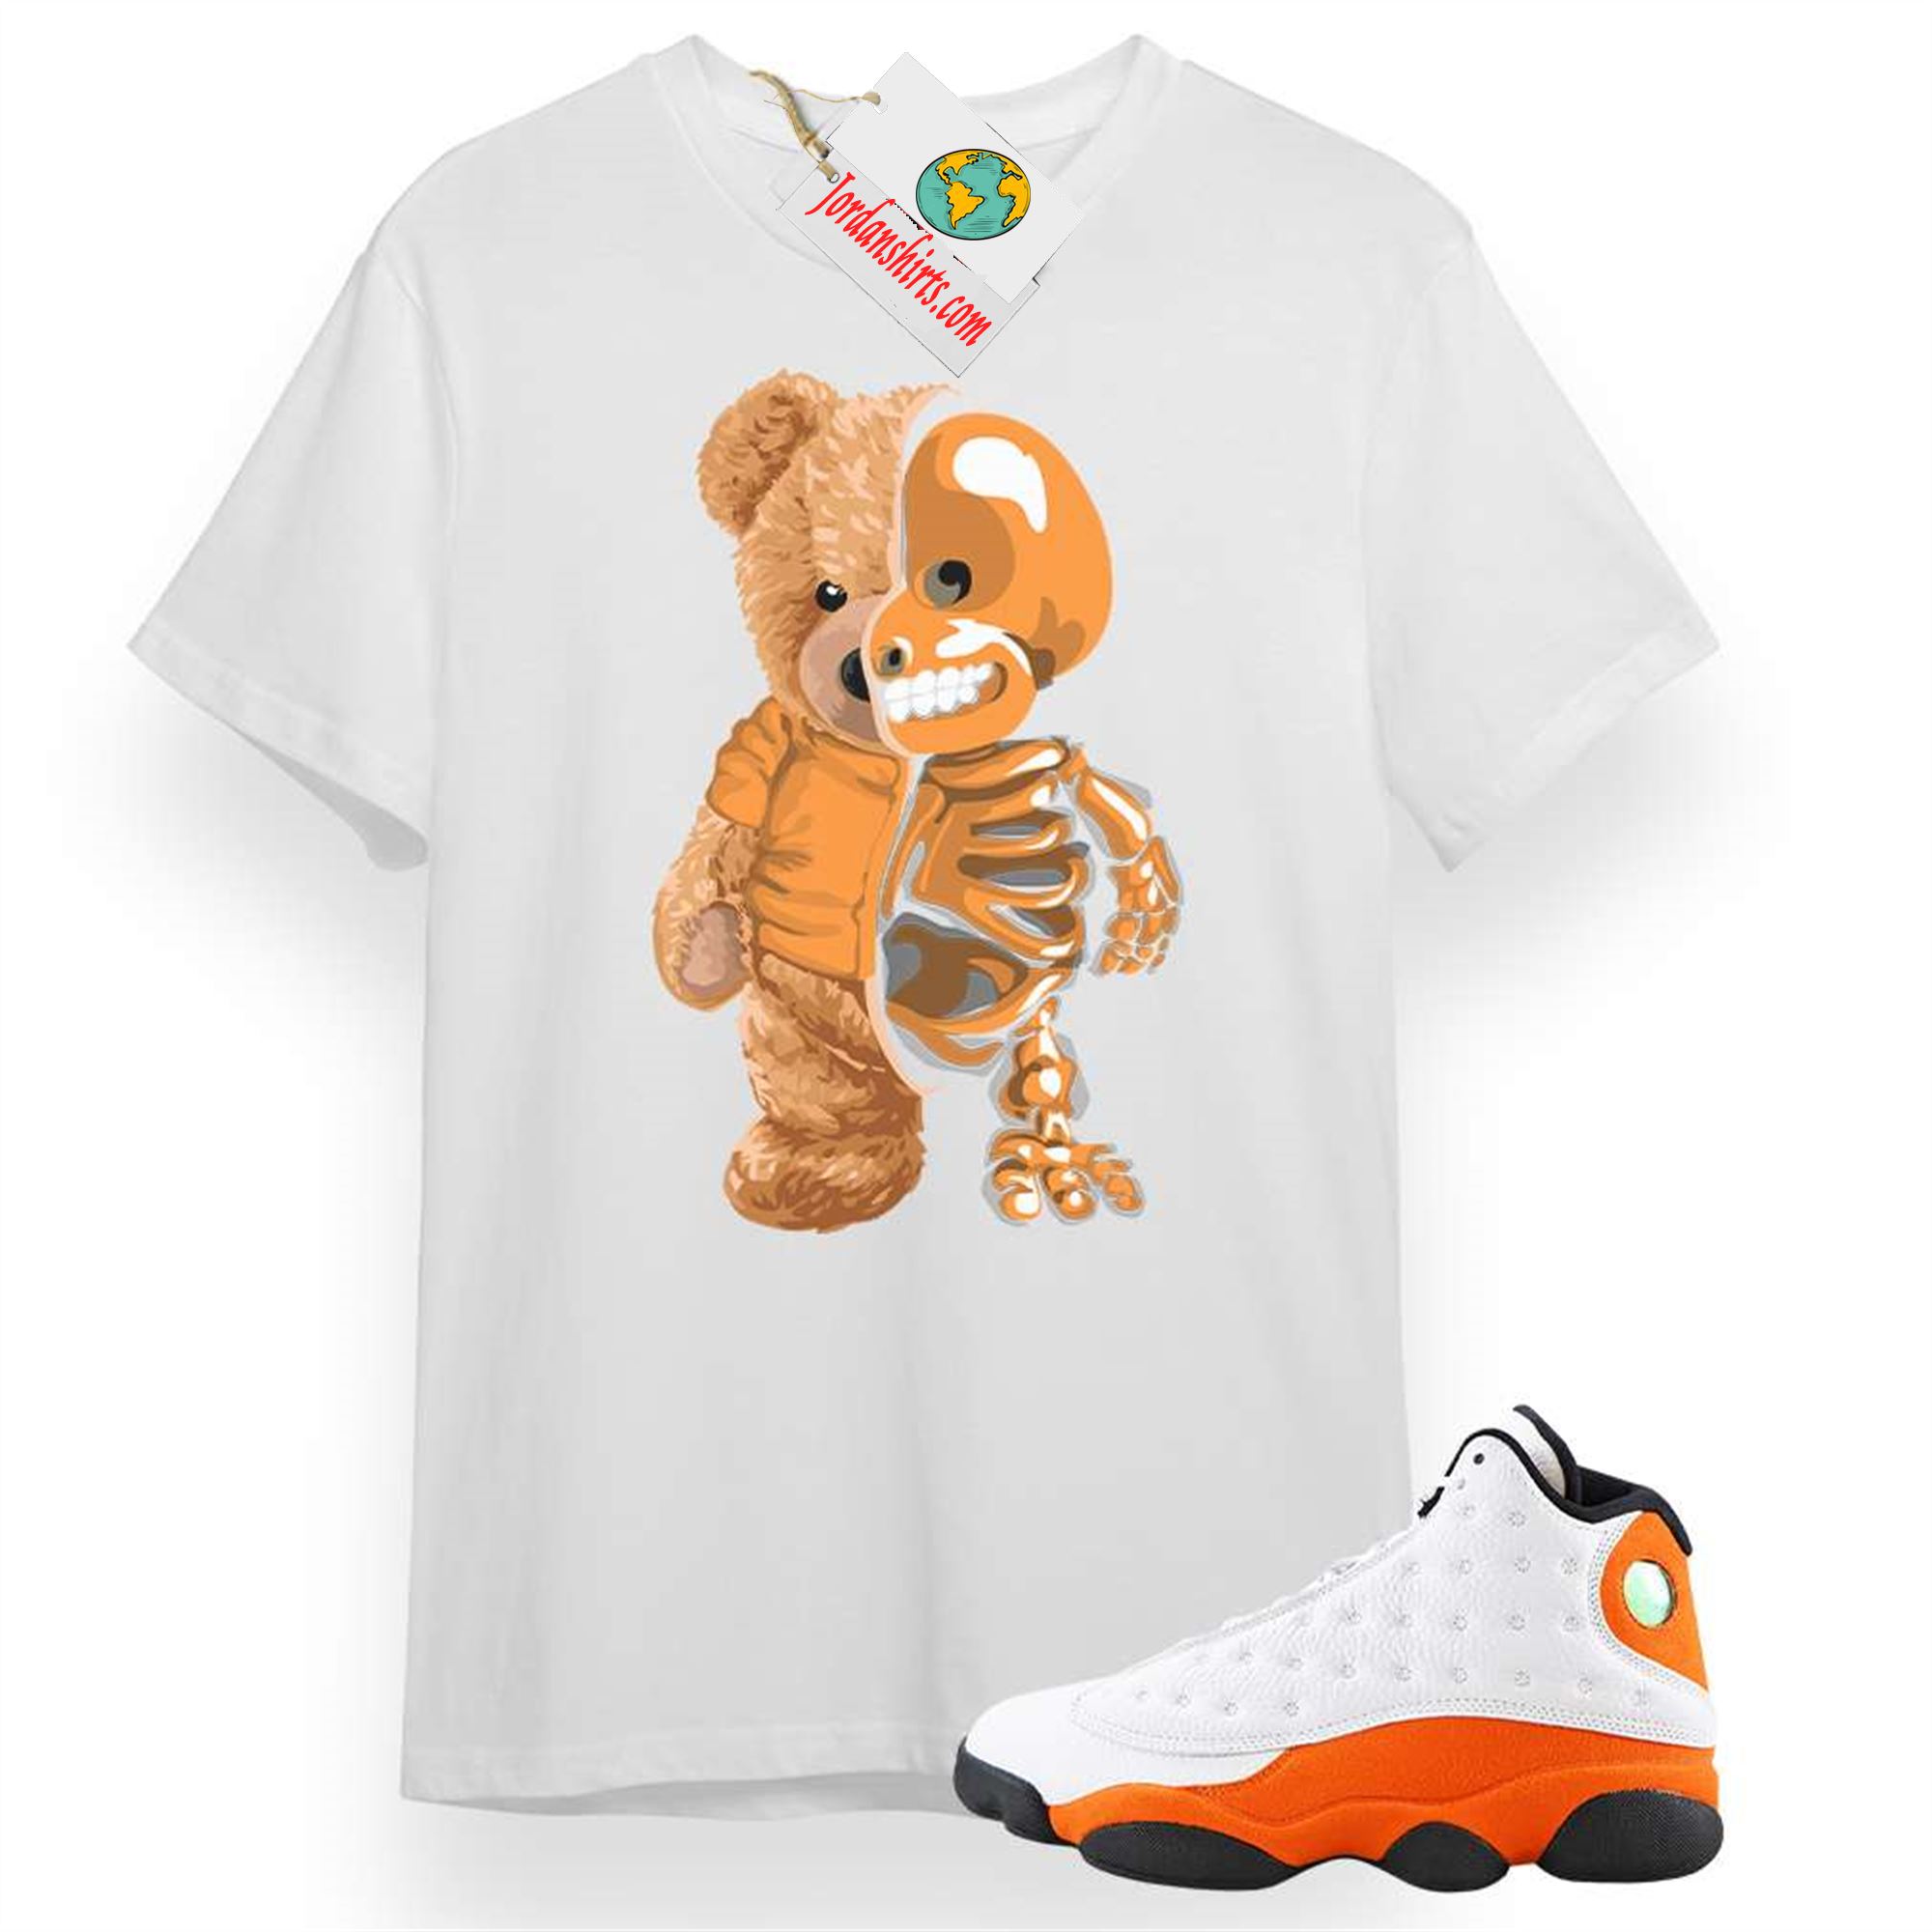 Jordan 13 Shirt, Teddy Bear Terminator White T-shirt Air Jordan 13 Starfish 13s Plus Size Up To 5xl